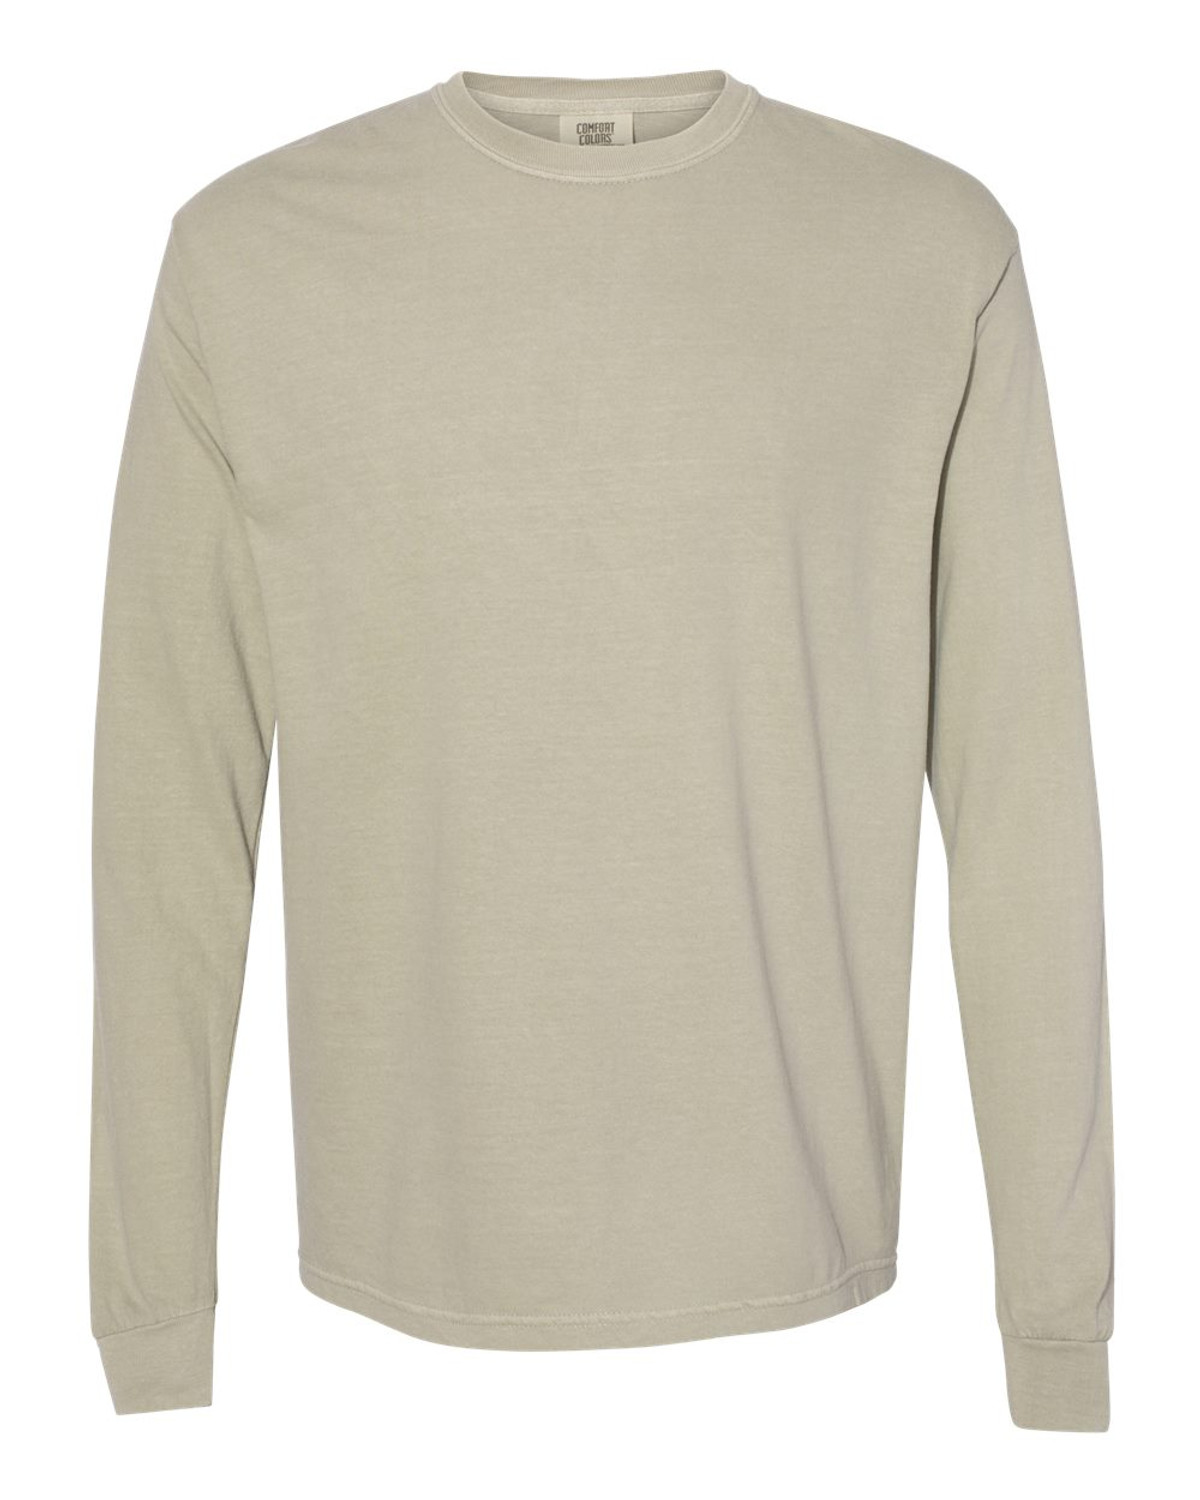 6014 Comfort Colors Garment-Dyed Heavyweight Long Sleeve T-Shirt 